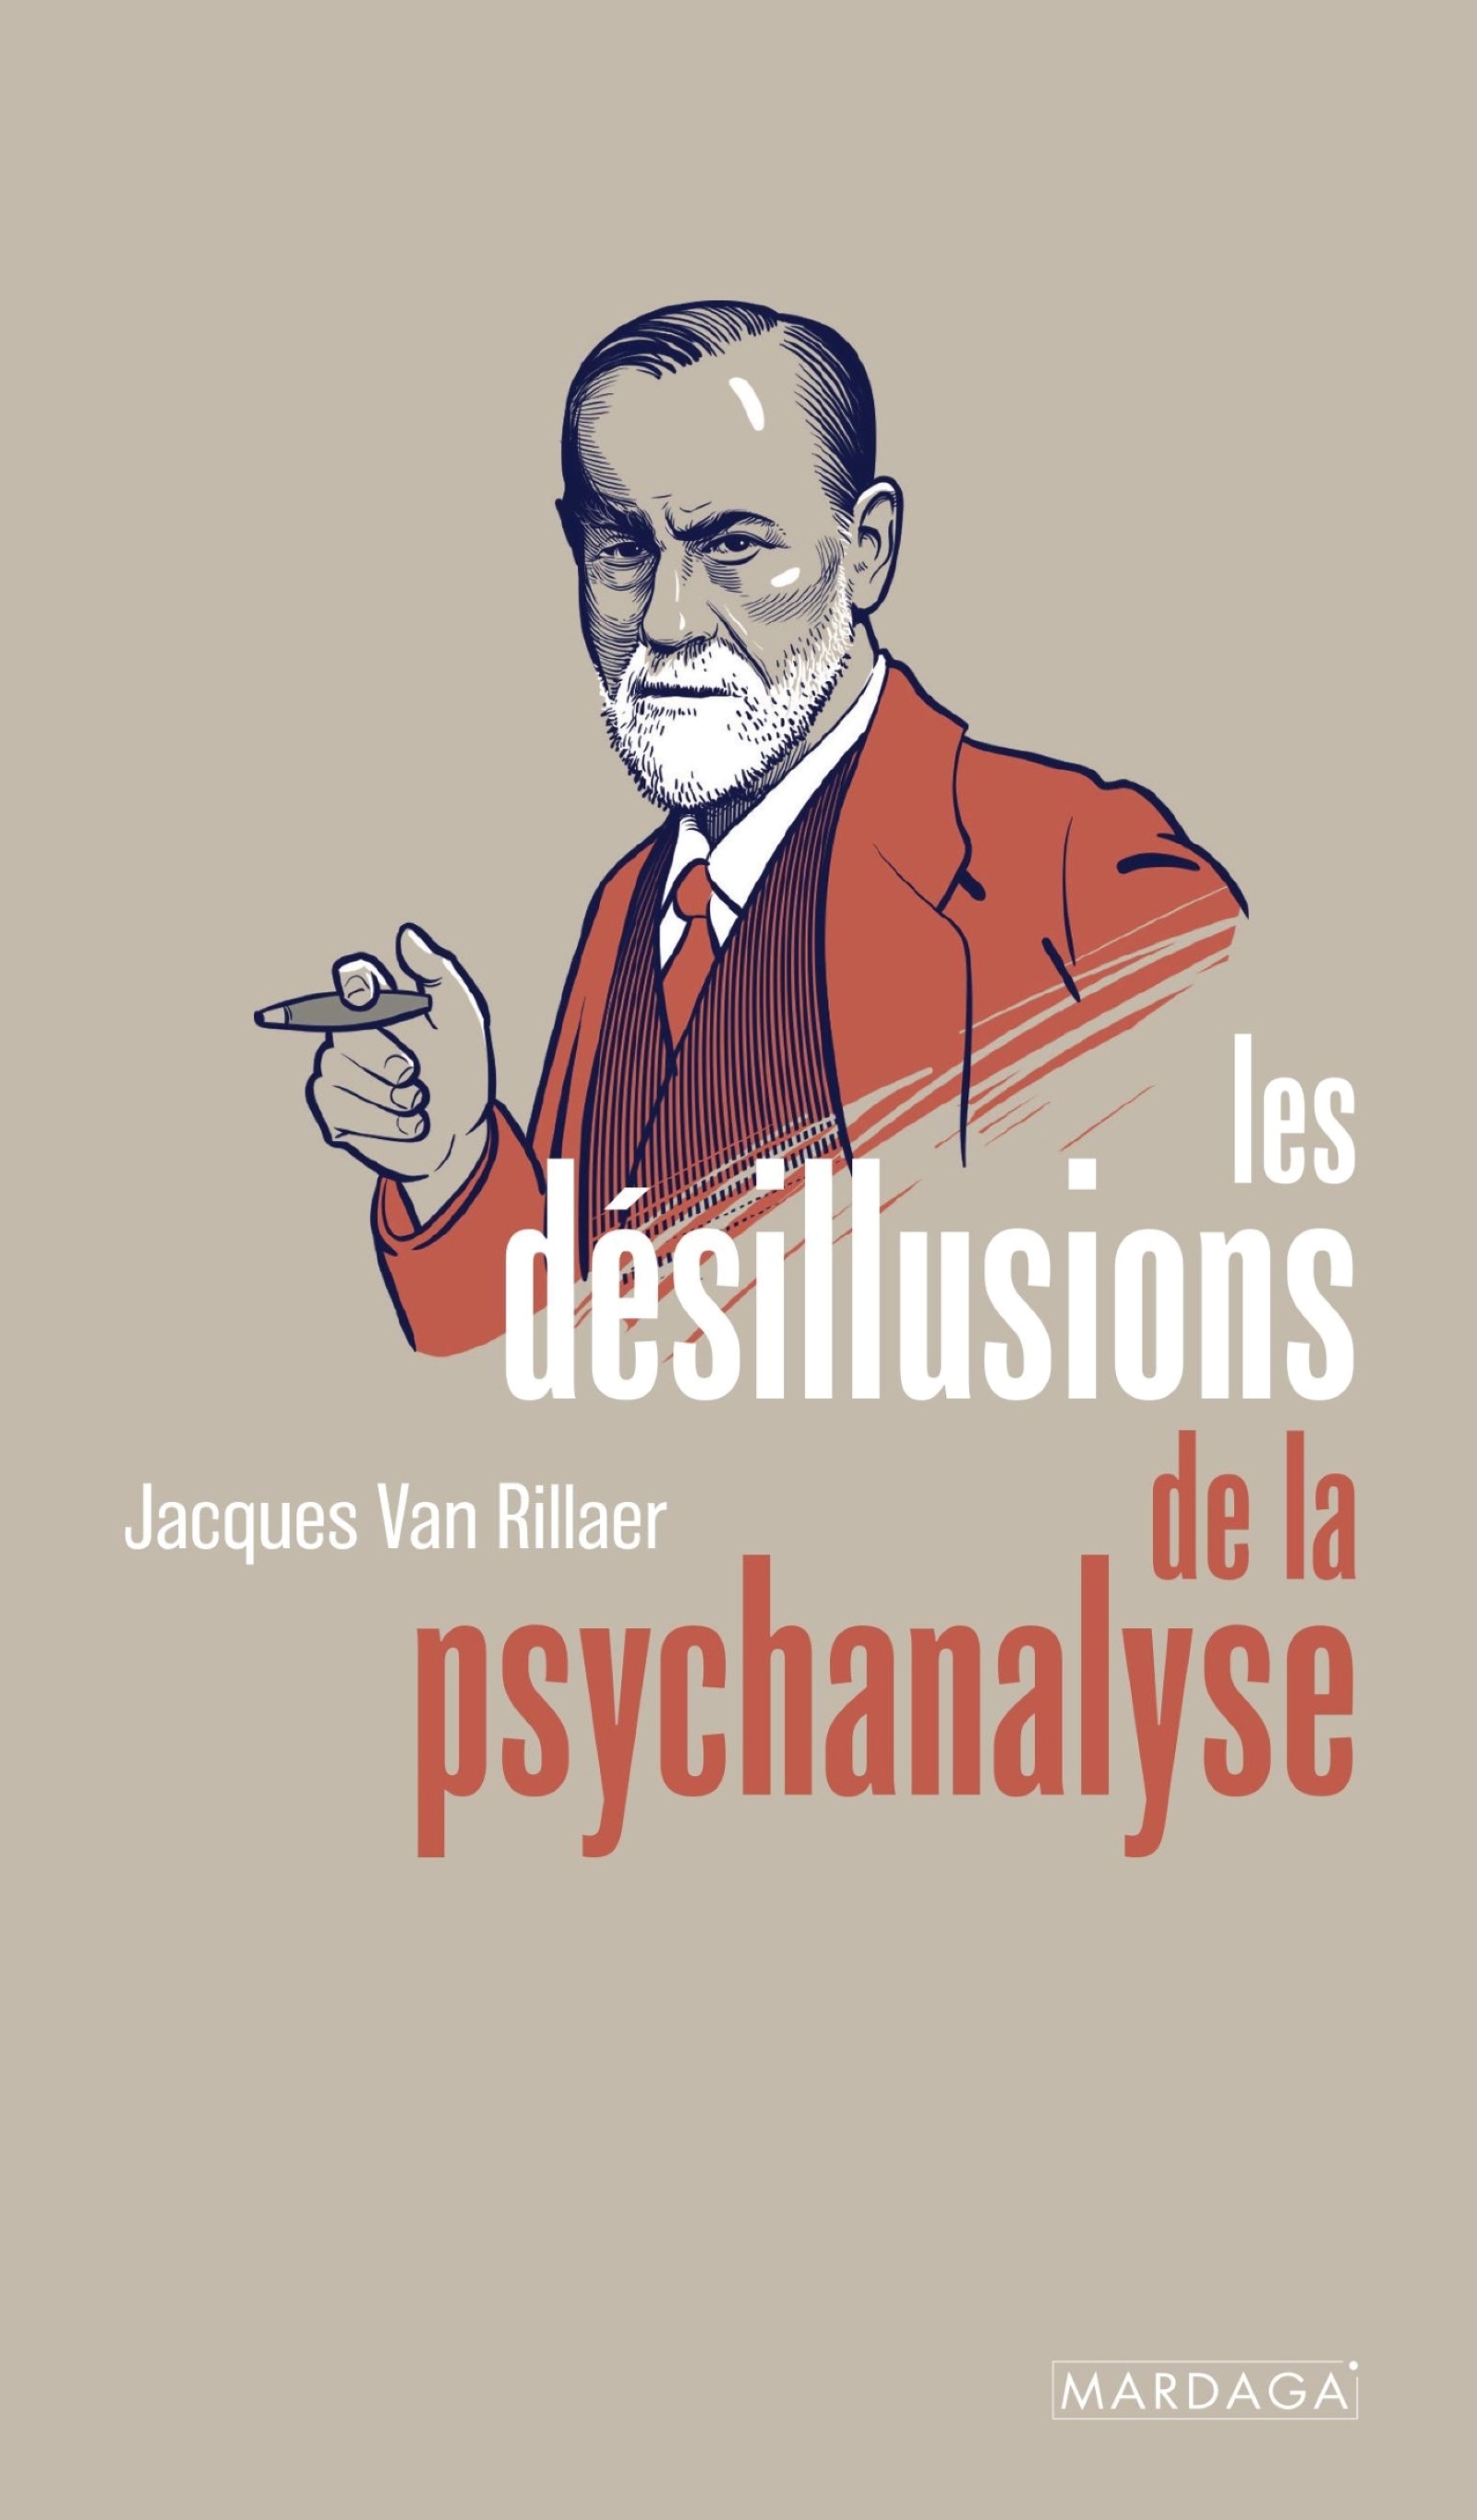 Les désillusions de la psychanalyse / The Disappointments of Psychoanalysis